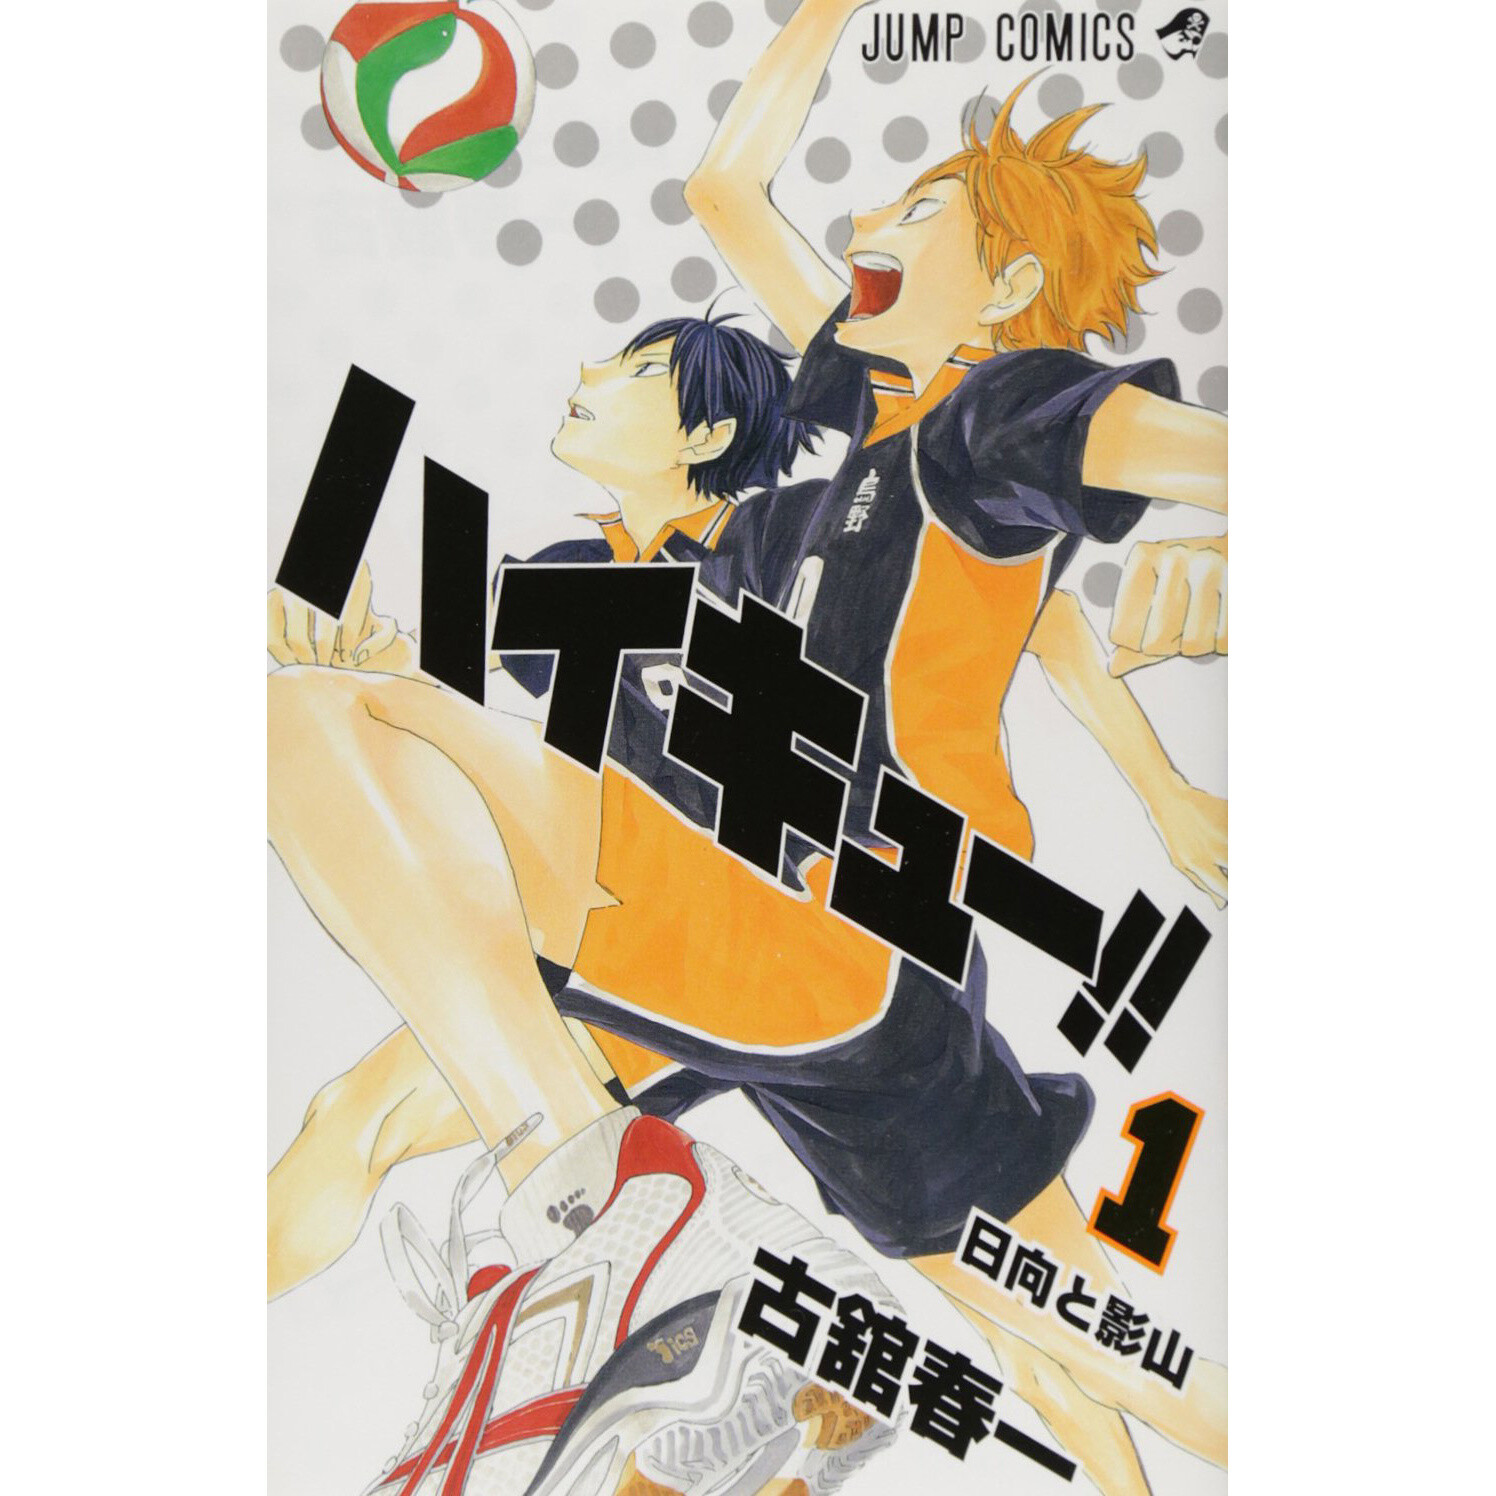 Haikyu!! S1 Complete Collection Blu-ray - Tokyo Otaku Mode (TOM)